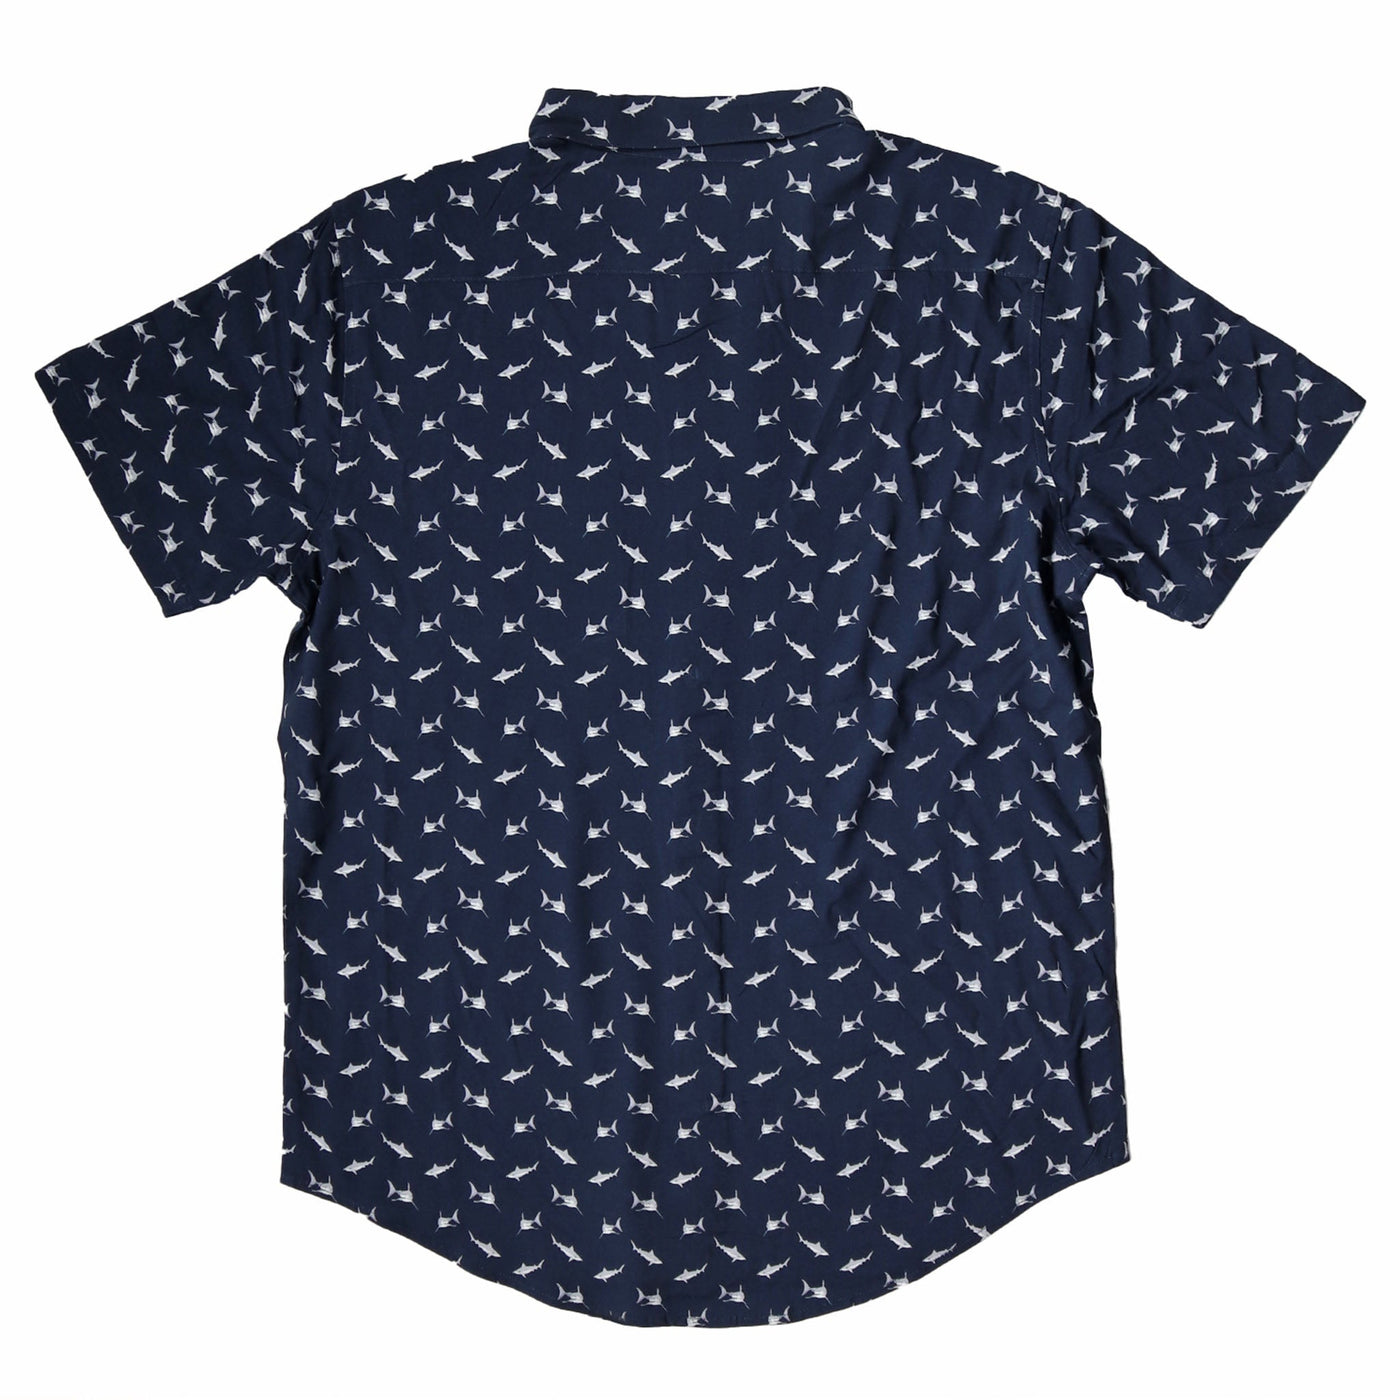 Sharks - Rayon Stretch Shirt by Bermies Swimwear